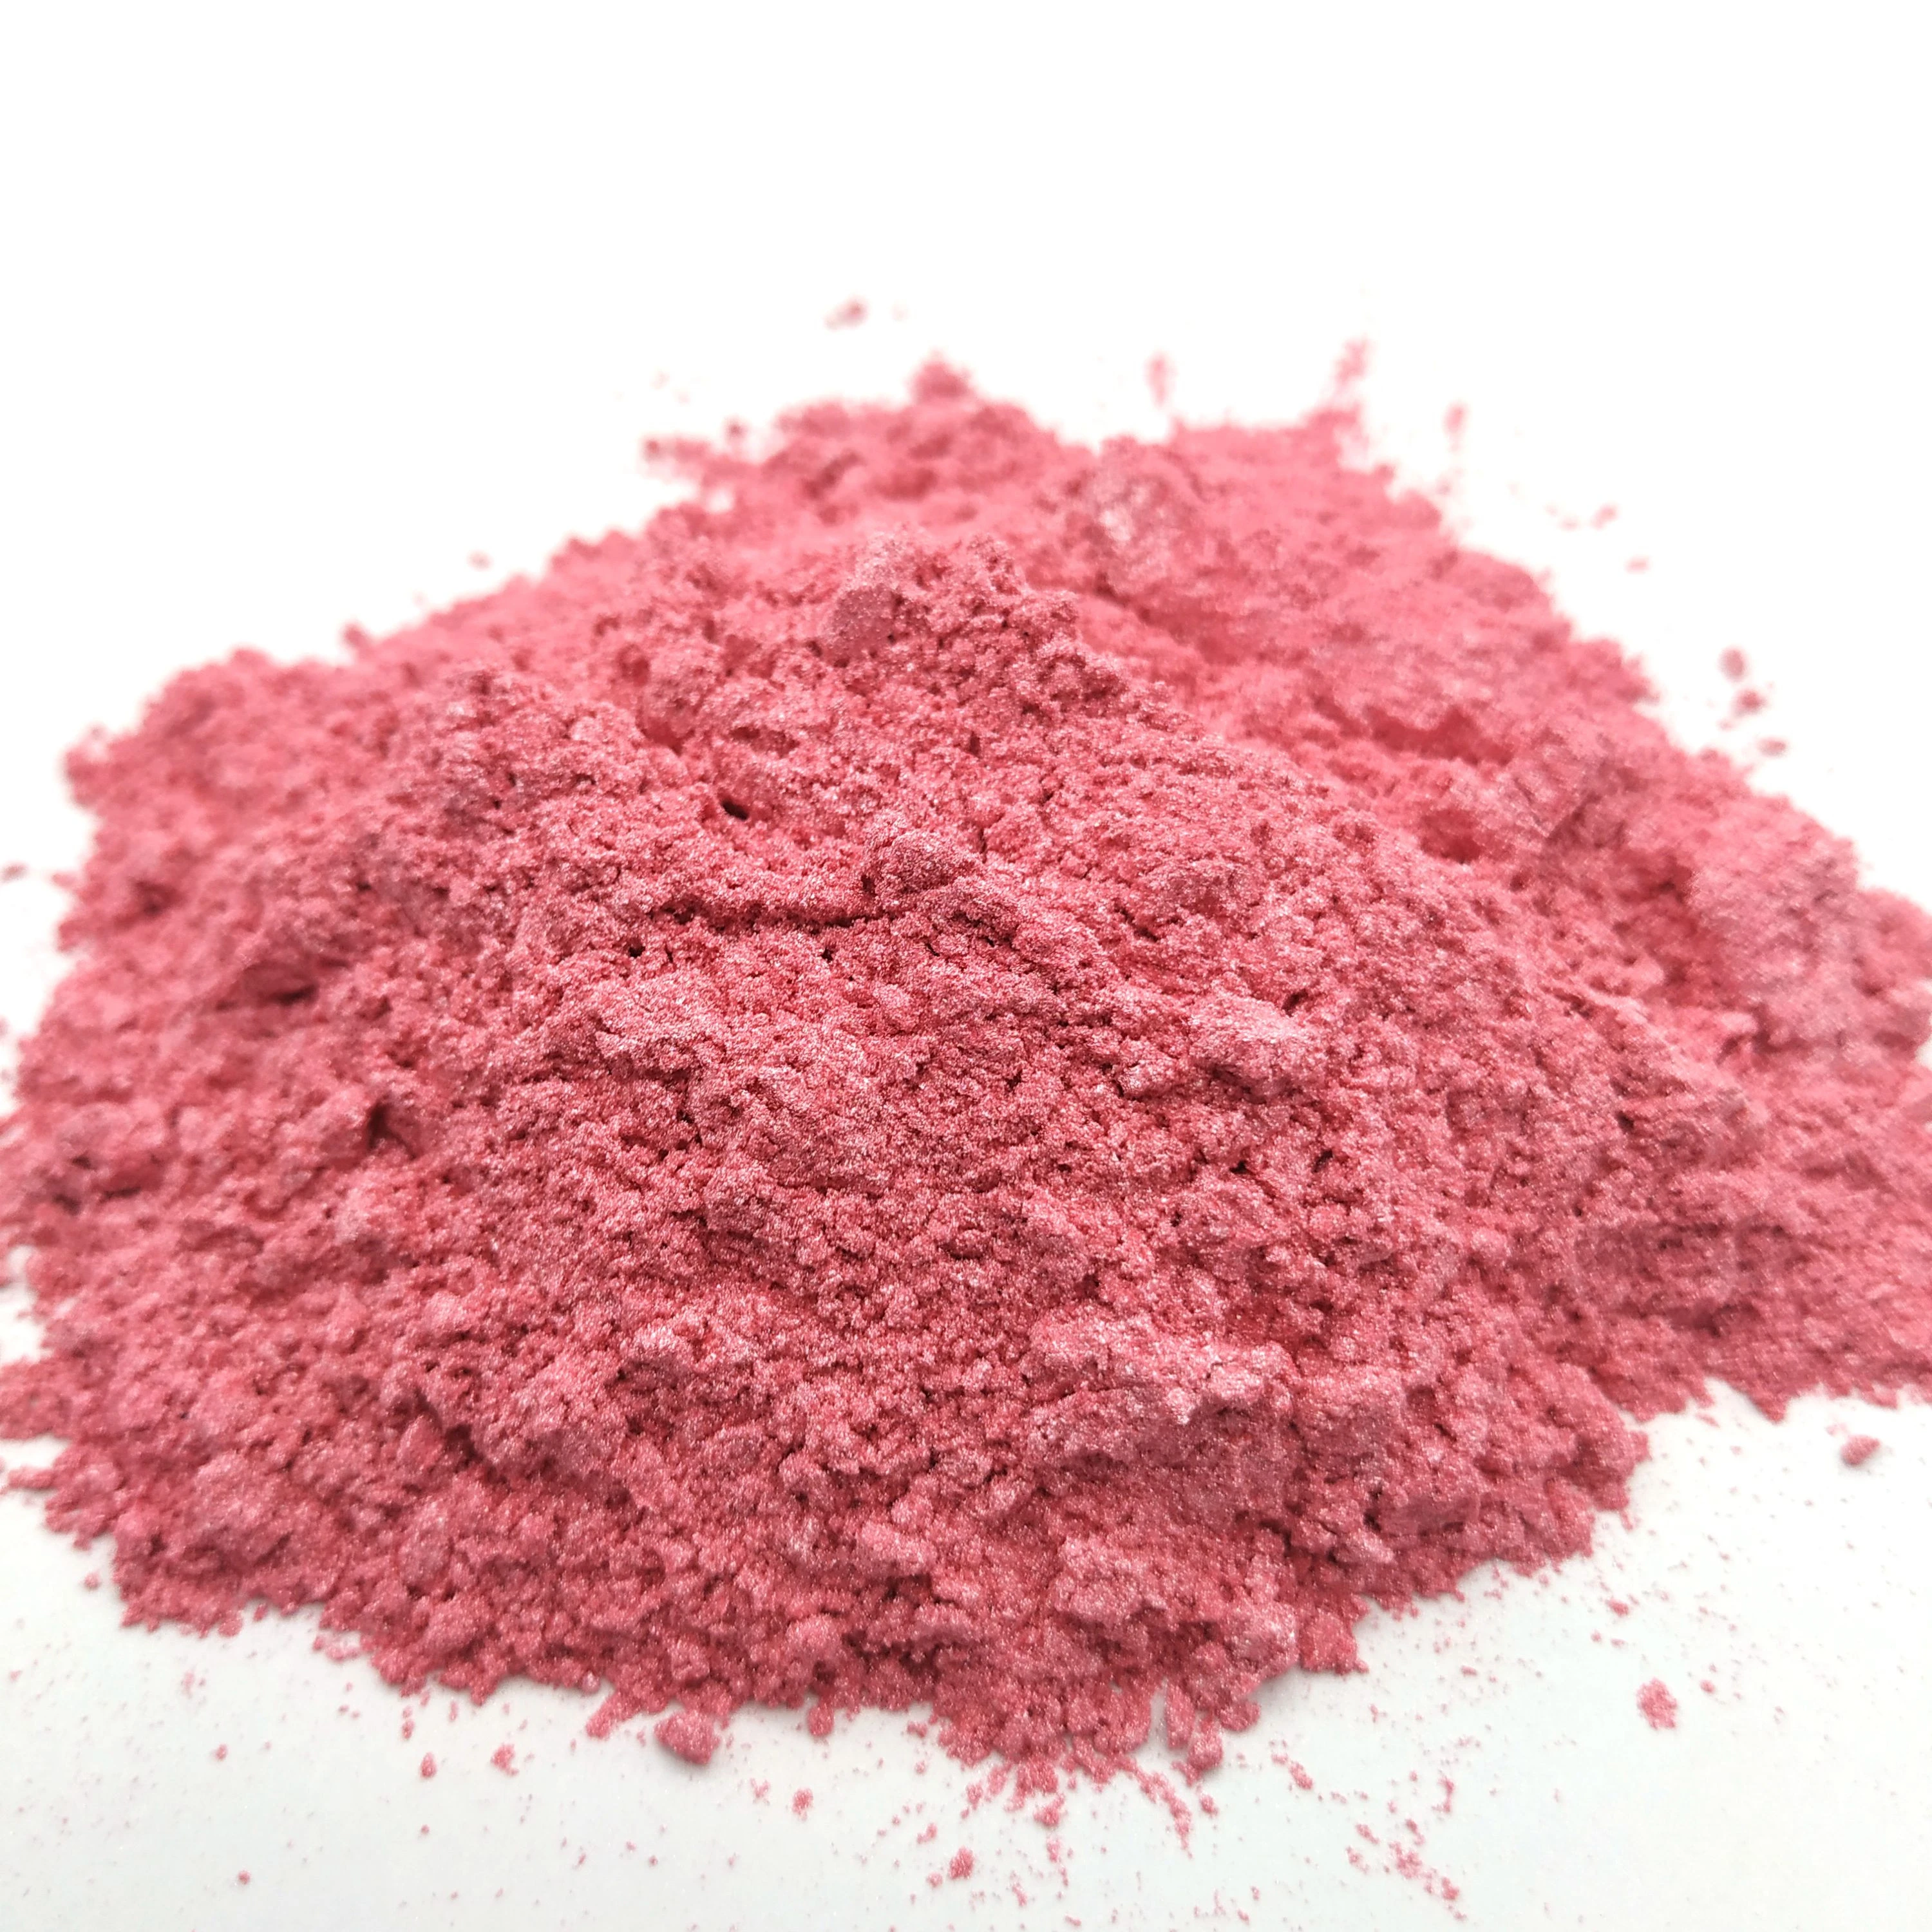 Food Grade Red Pearl Pigment Powder Coating